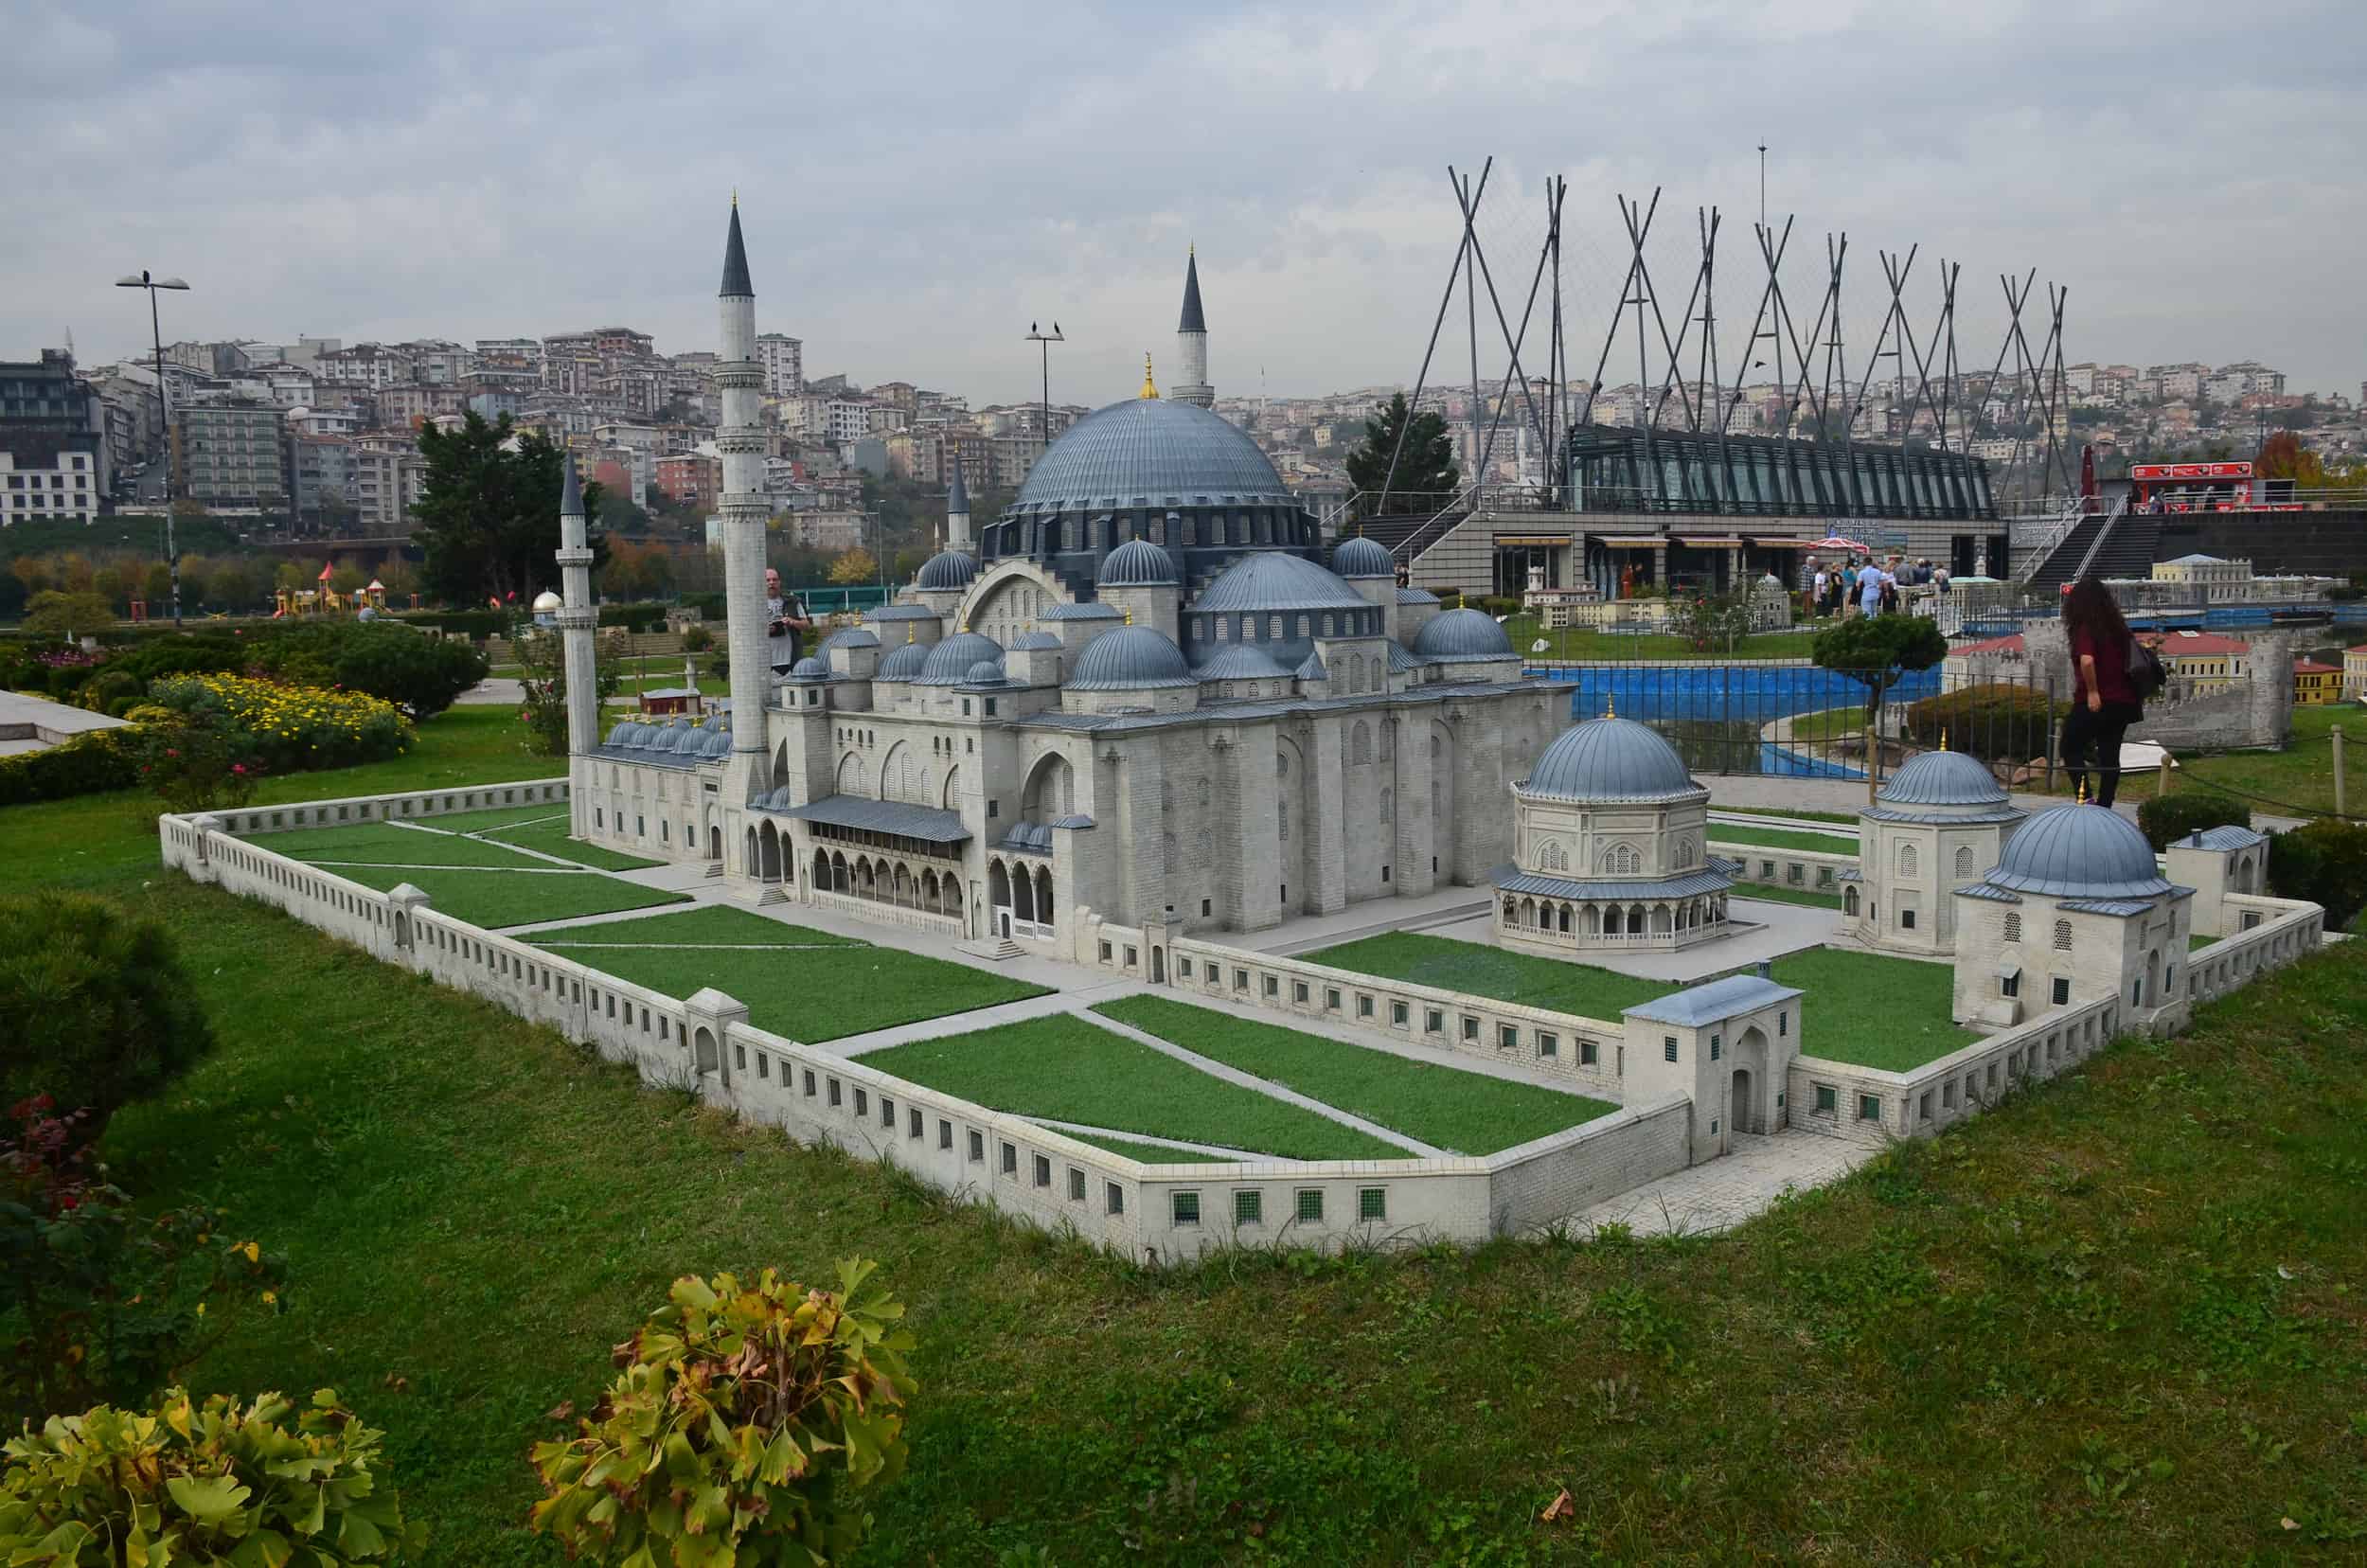 Model of the Süleymaniye Mosque, Süleymaniye, 16th century at Miniatürk in Istanbul, Turkey